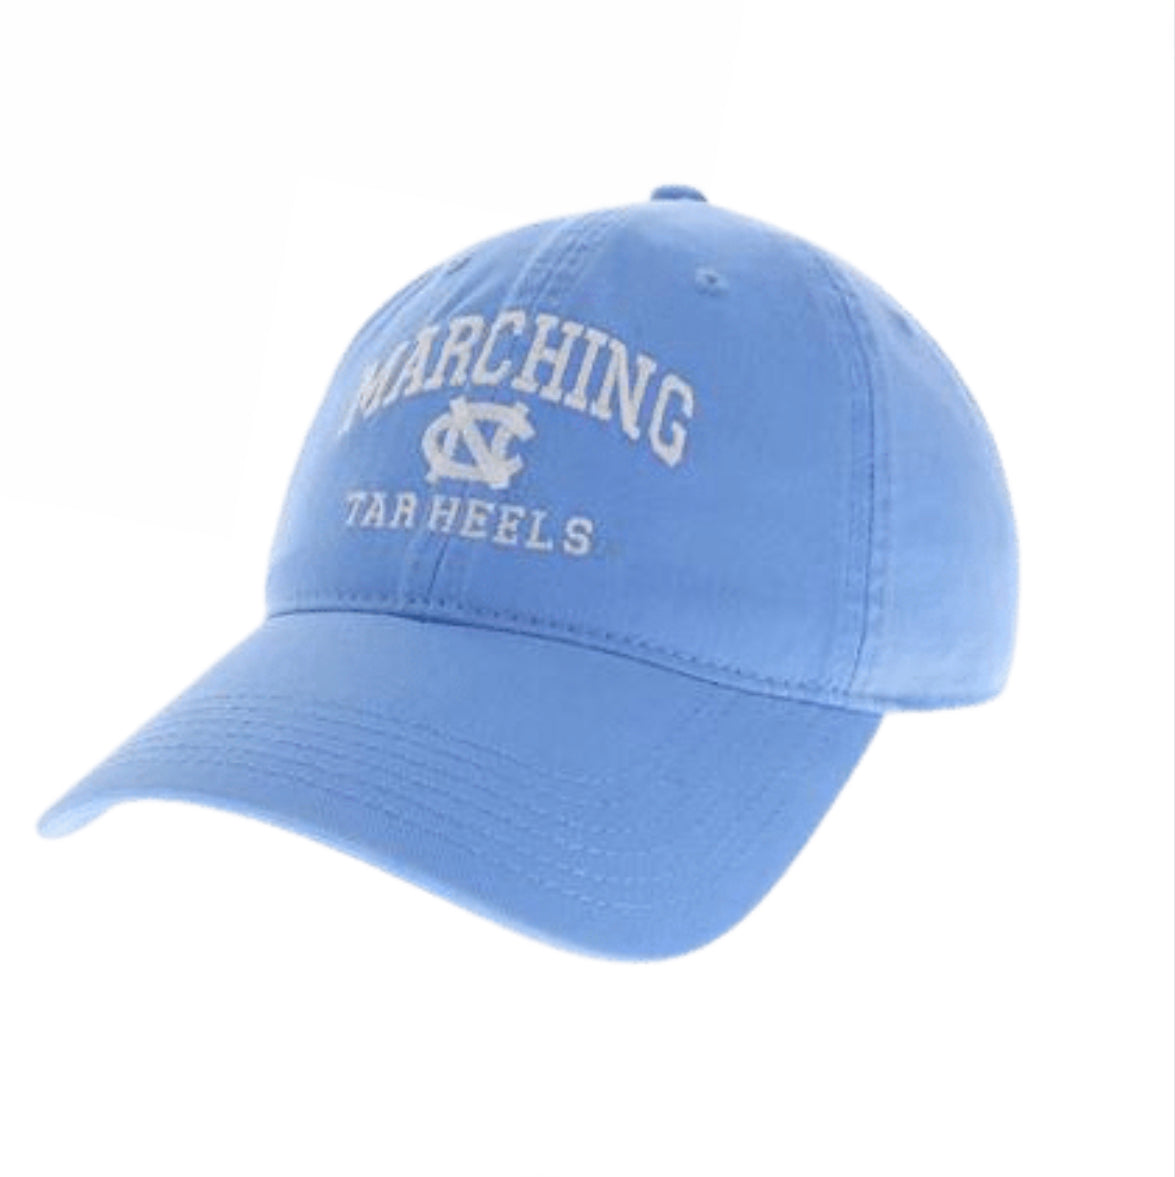 Carolina Marching Tar Heels Hat by Legacy - UNC Sport Hat